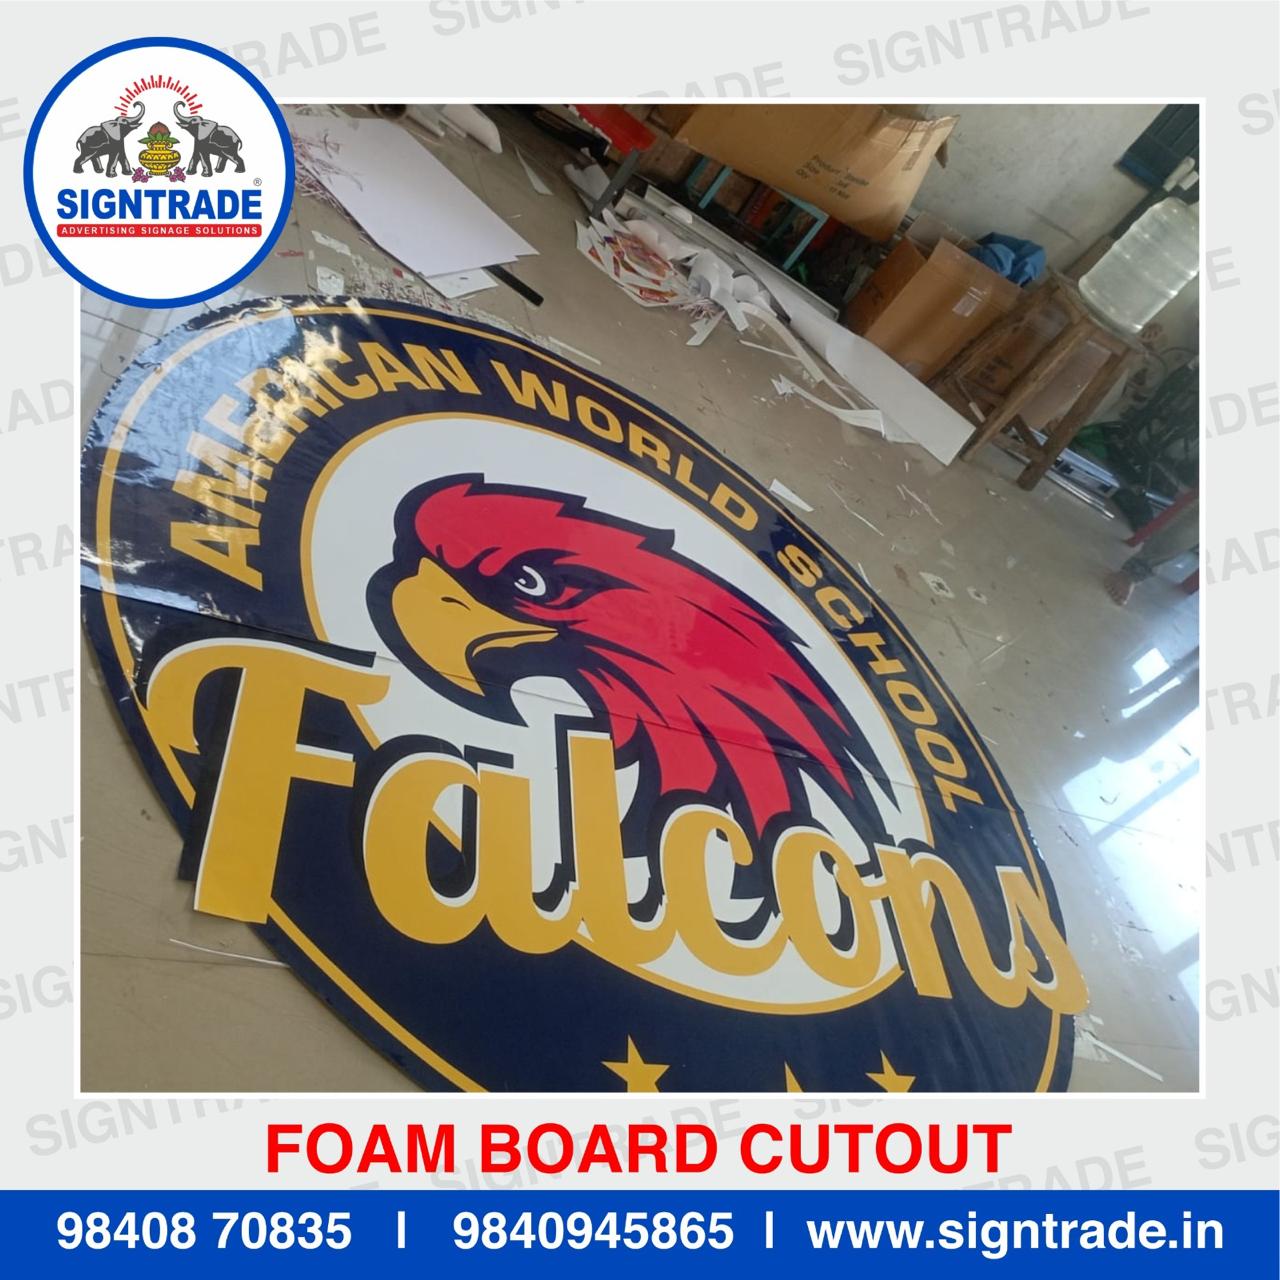 Foam Board Cutout in Chennai